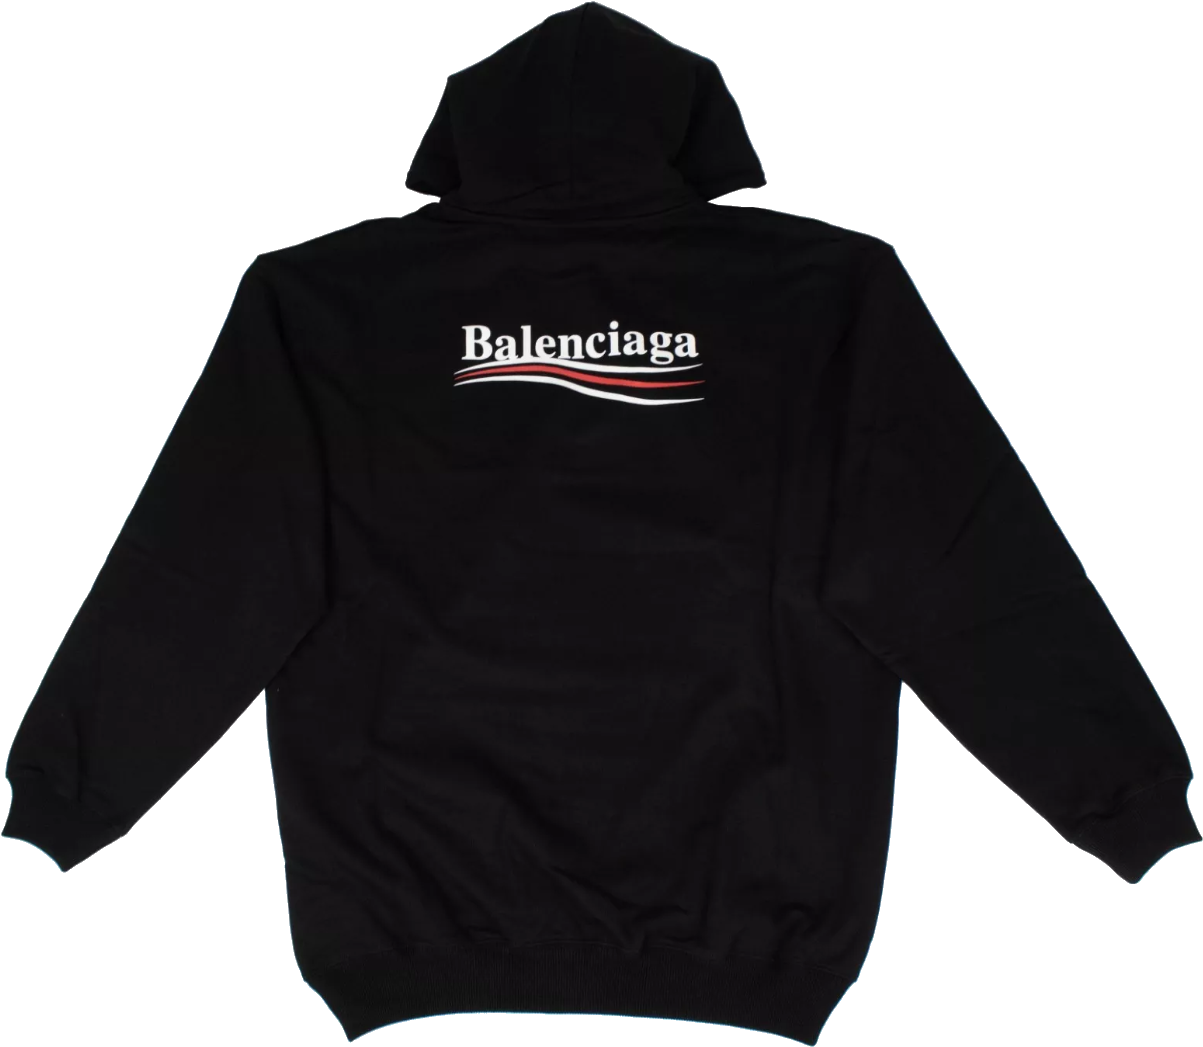 Balenciaga logo PNG изображение фон